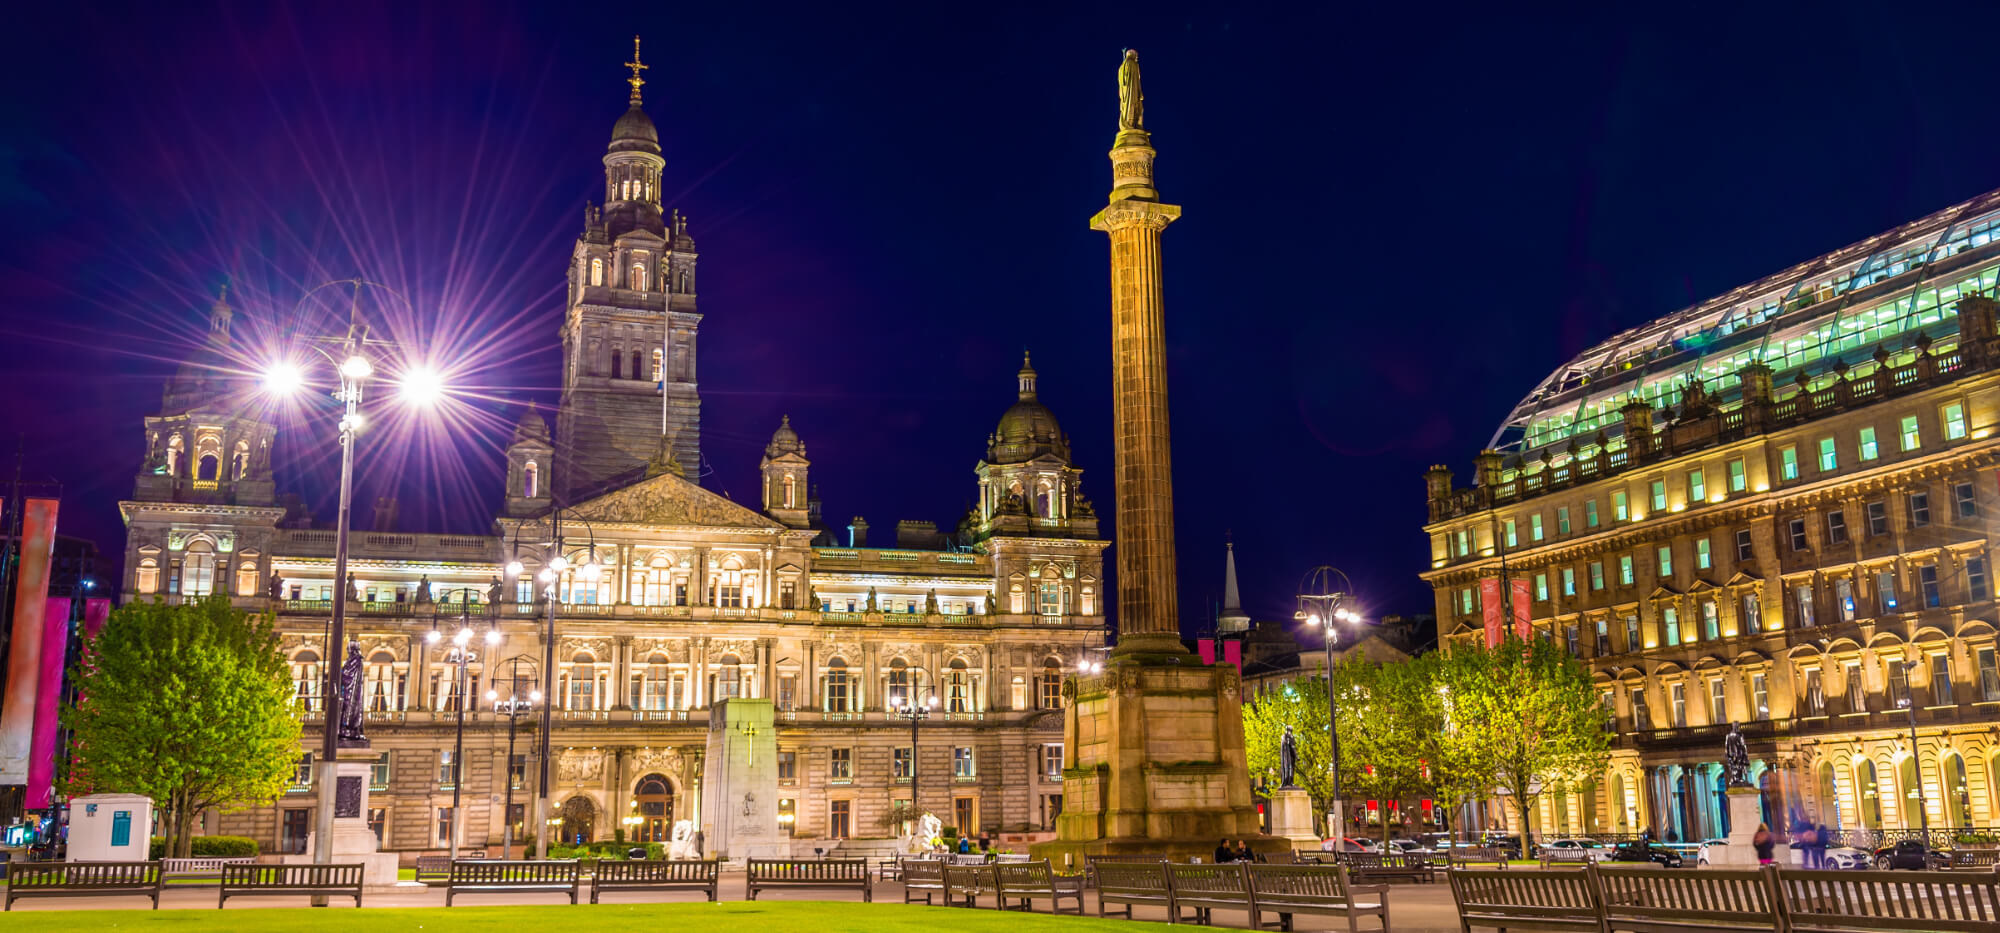 Glasgow City Chambers at night